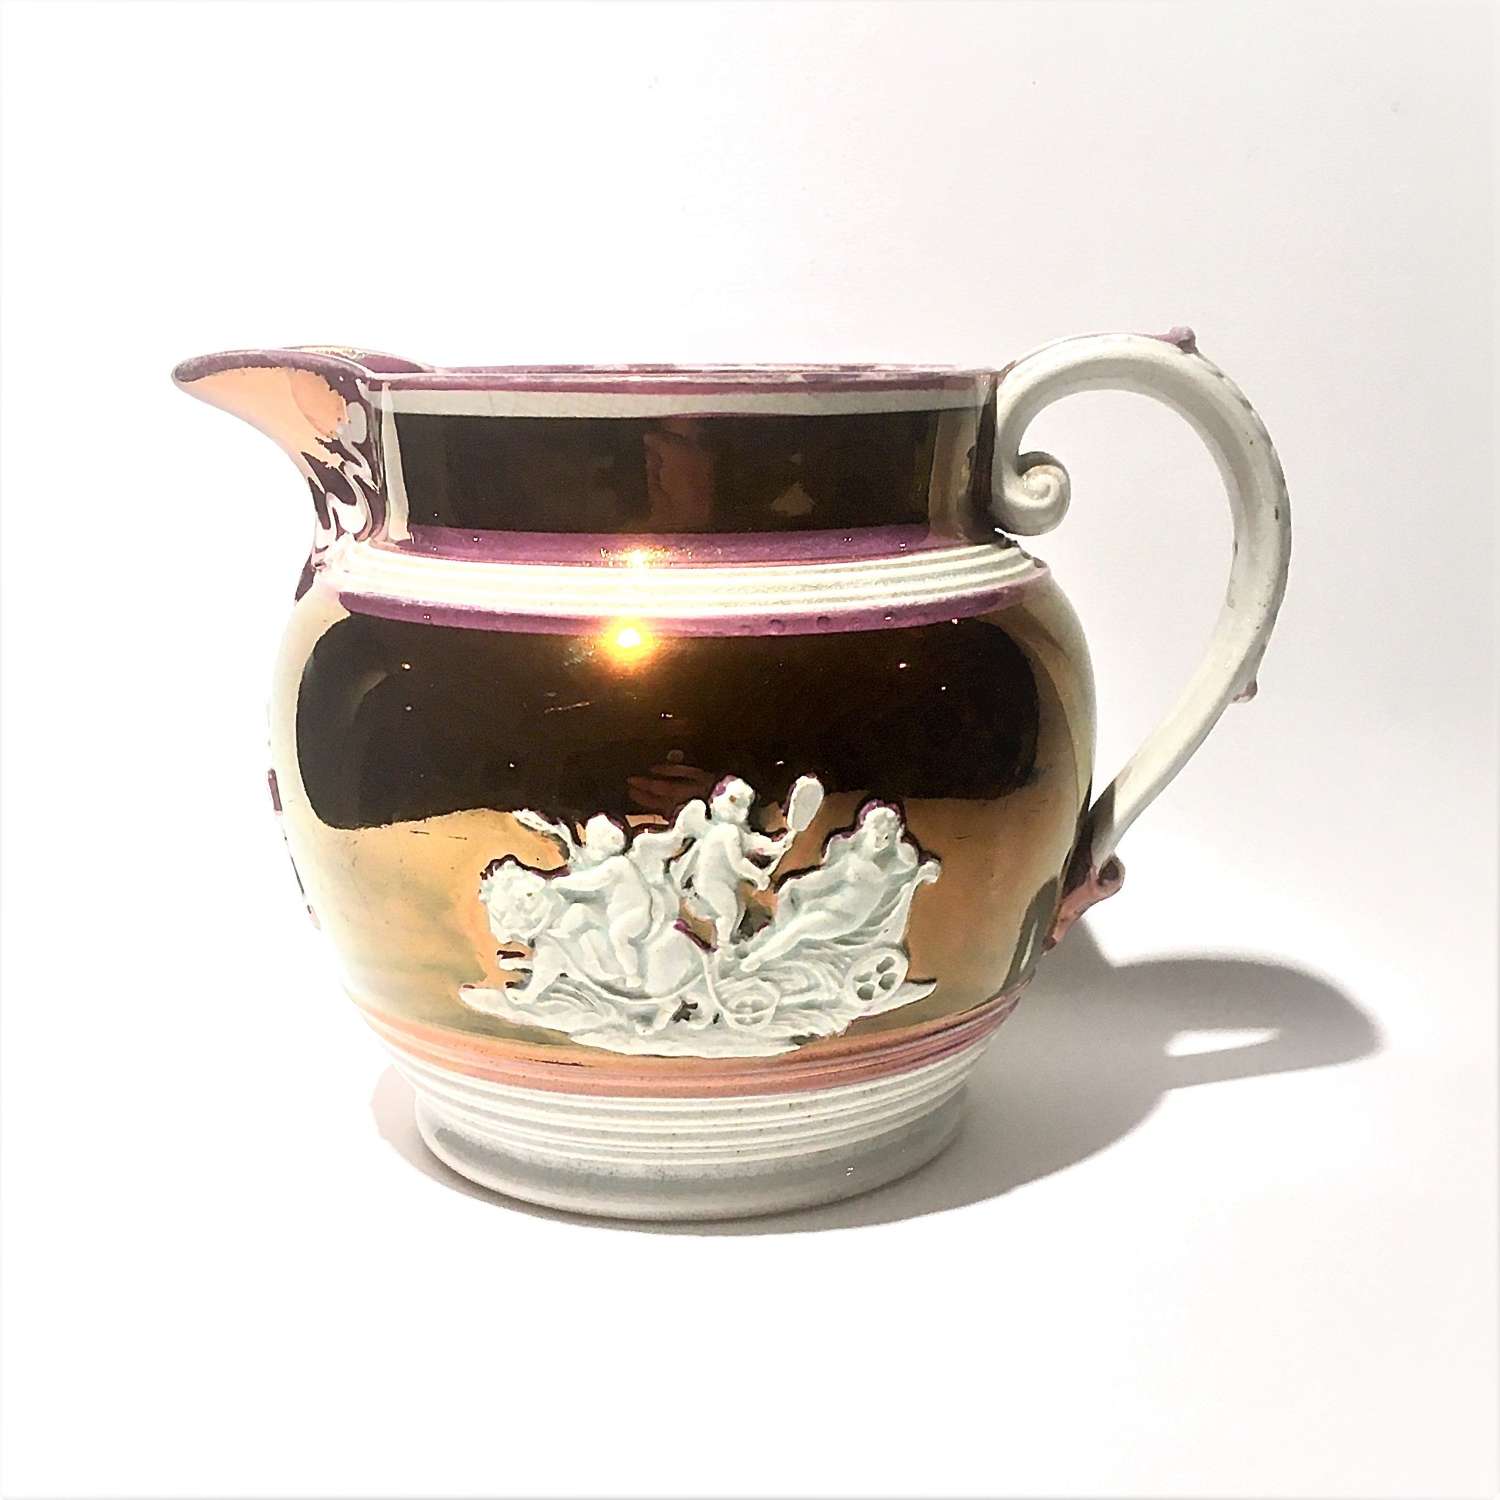 Regency era, pink copper lustre ware jug with neoclassical motifs